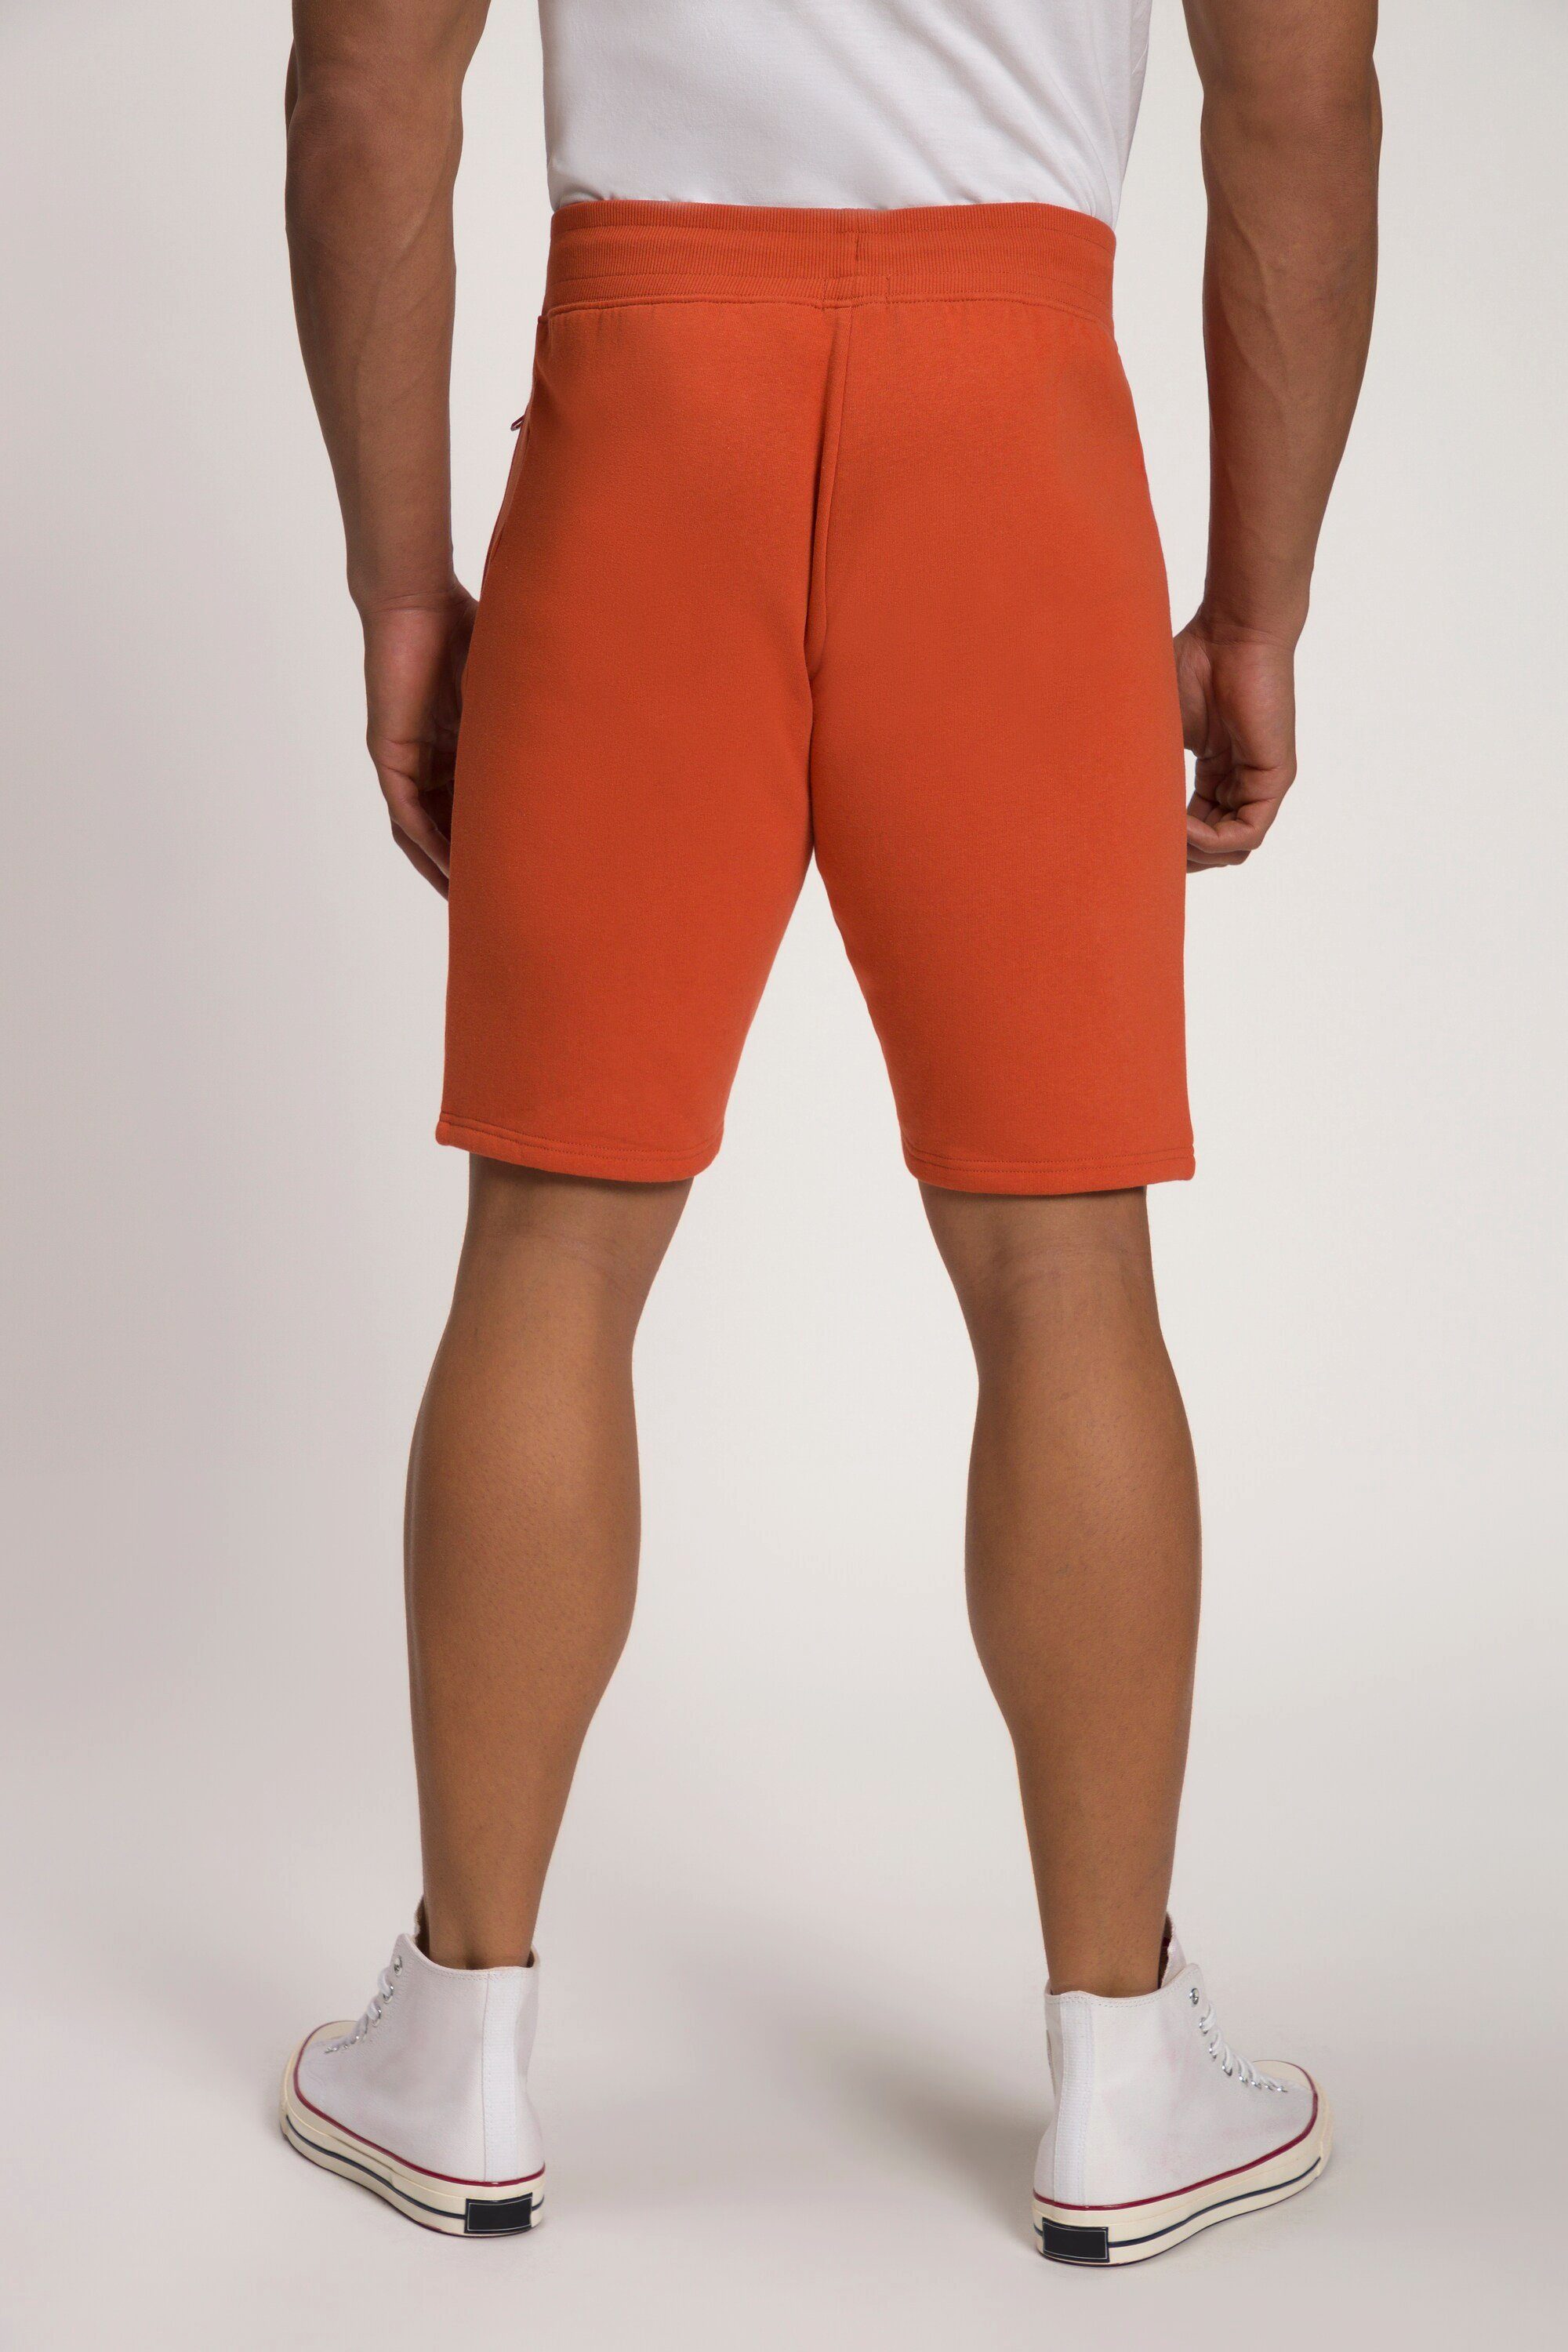 Elastibund Bermudas Homewear JP1880 Sweat-Bermuda orange XL 8 bis